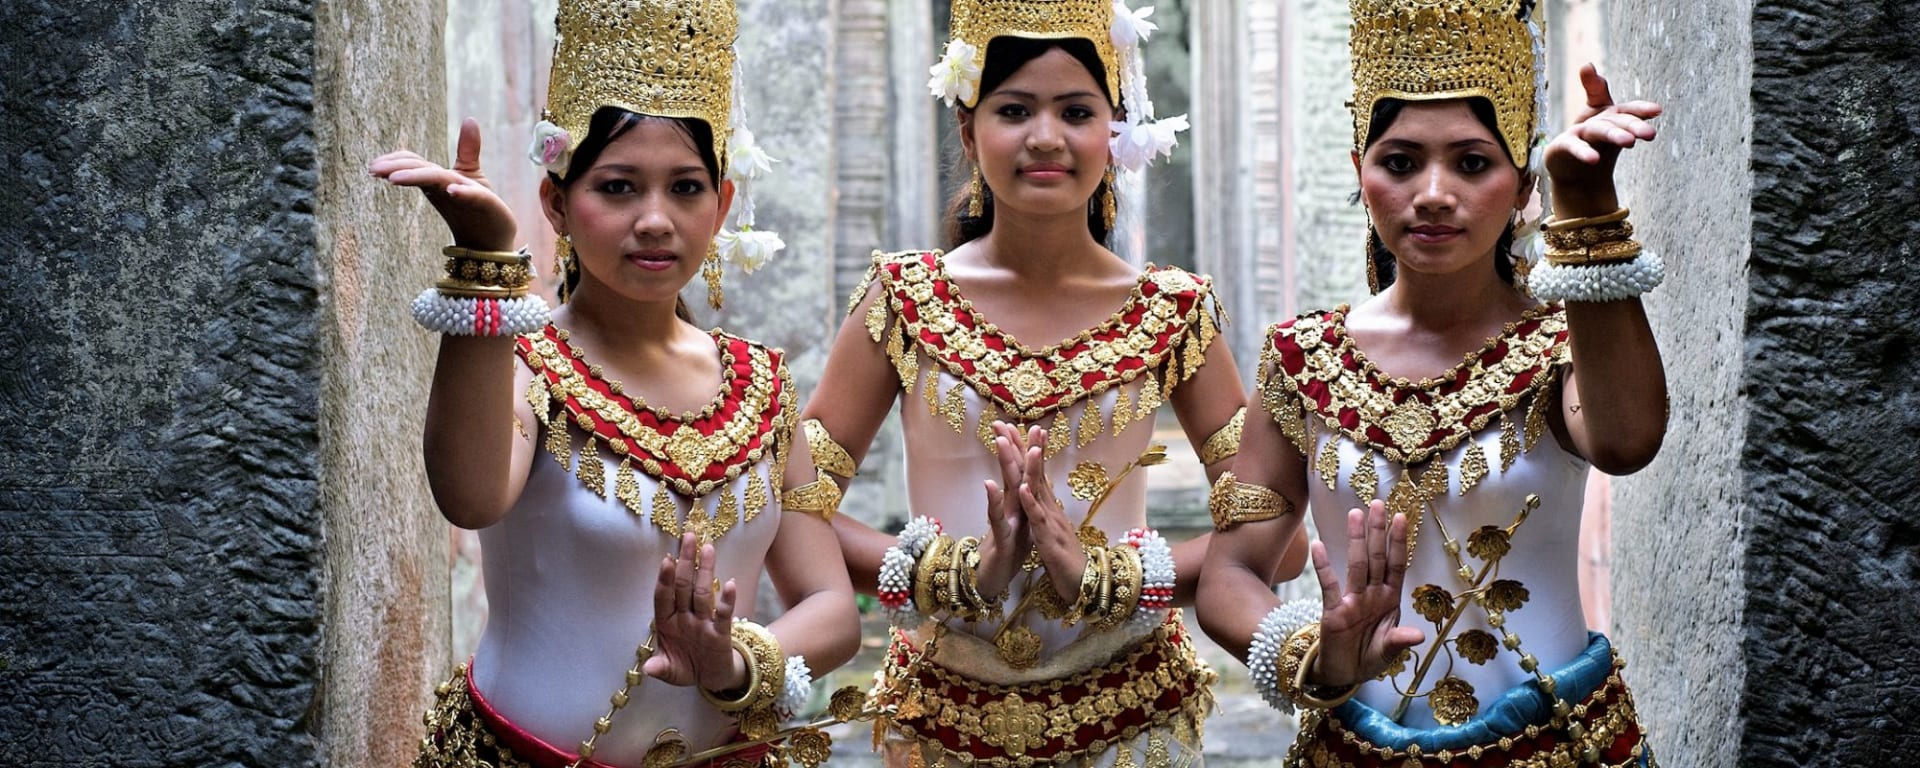 Mystisches Angkor ab Siem Reap: Siem Reap: Traditional dancers